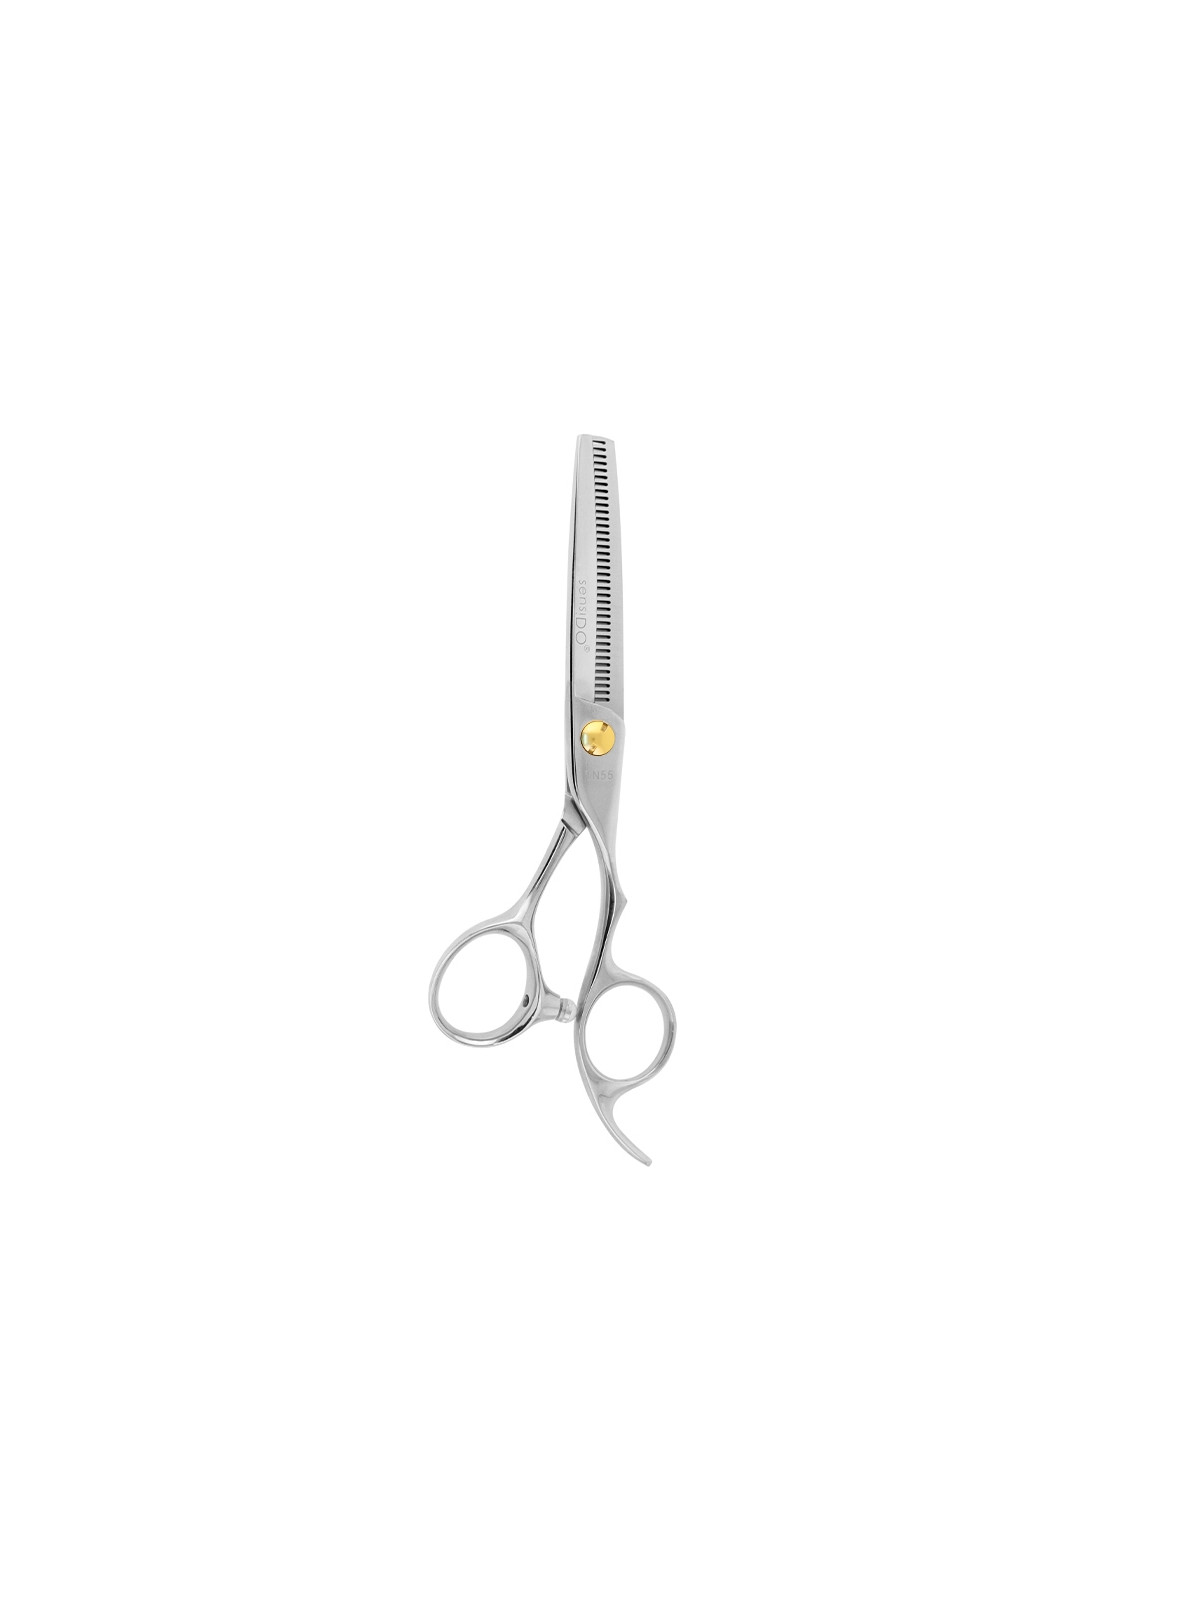 SensiDO TN Cobalt thinning scissors